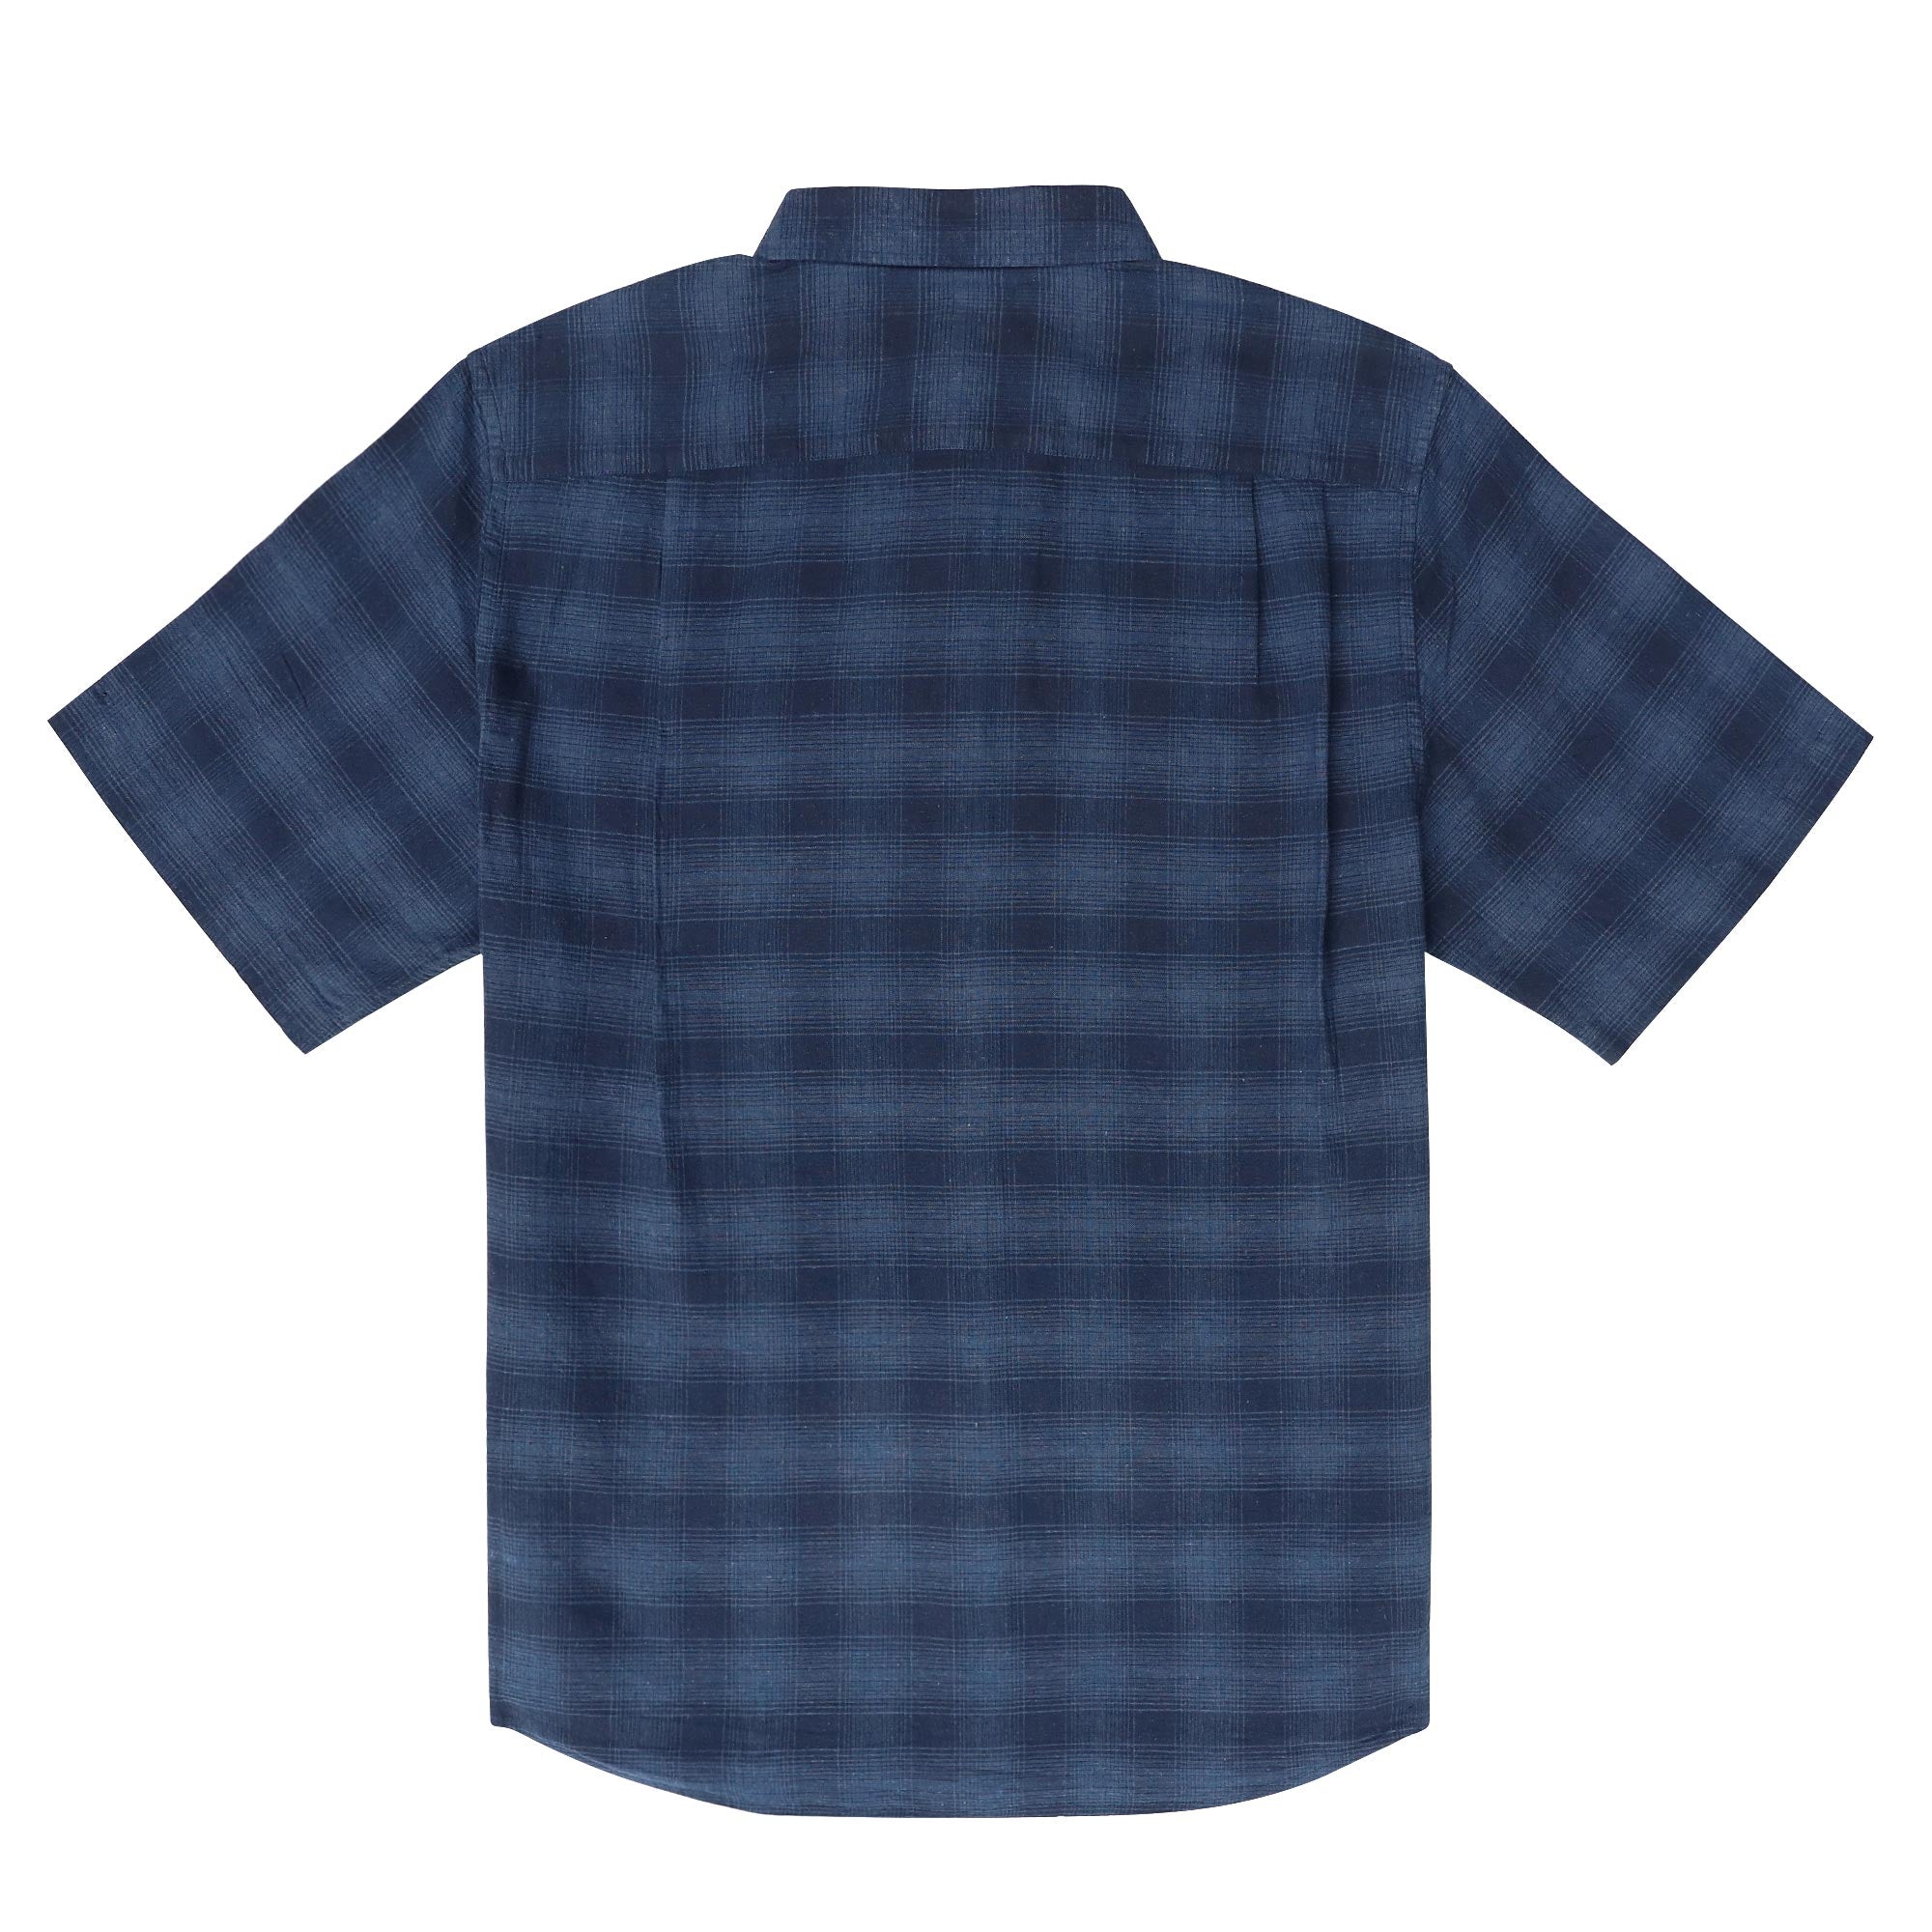 Dubinik® Mens Short Sleeve Button Down Shirts 100% Cotton Plaid Casual Shirt with Pocket #0109